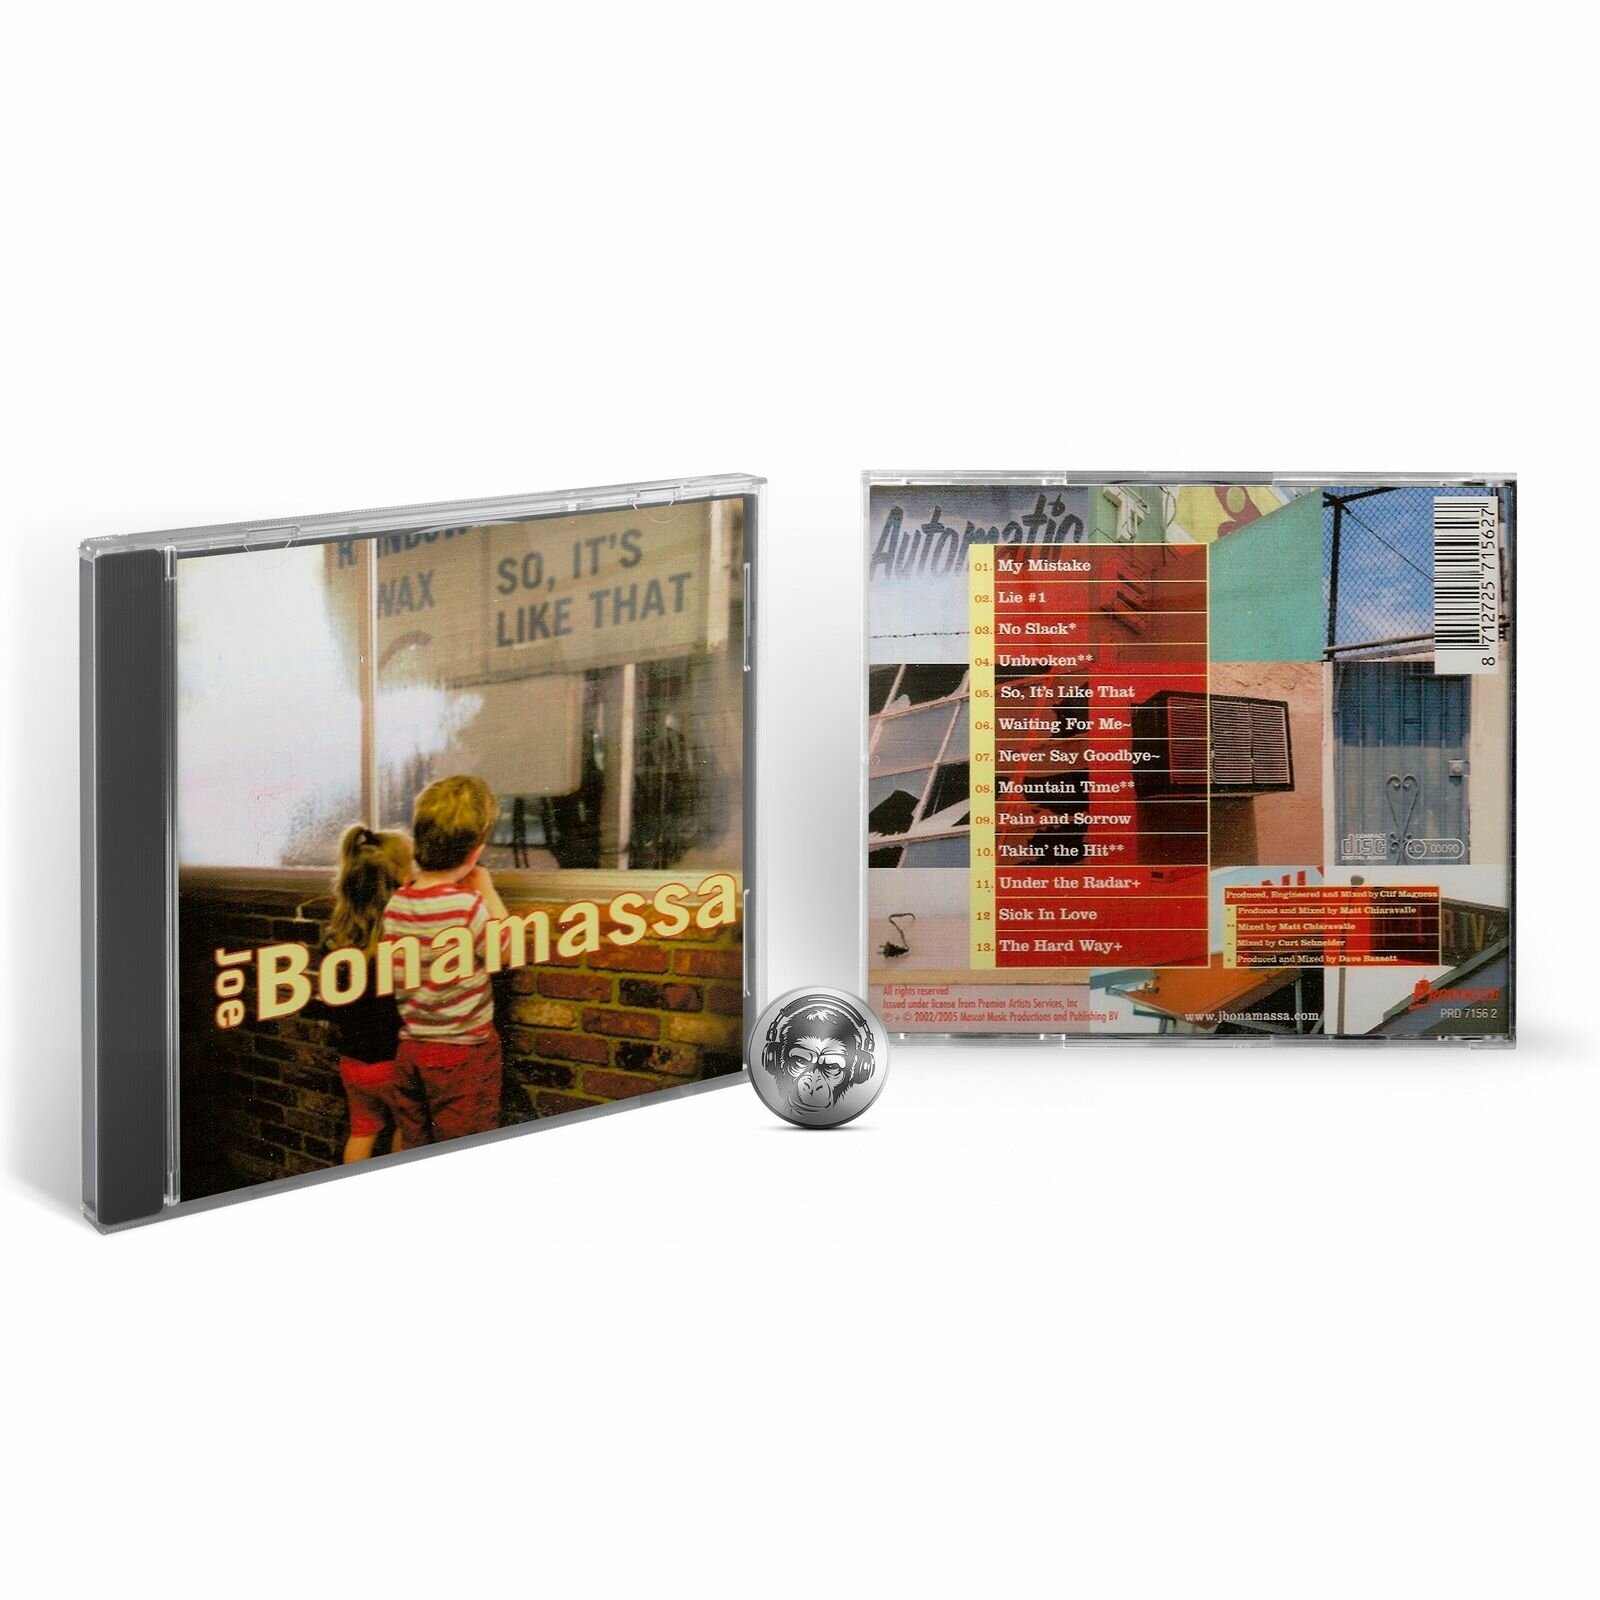 Joe Bonamassa - So, It's Like That (1CD) 2005 Mascot, Jewel Аудио диск